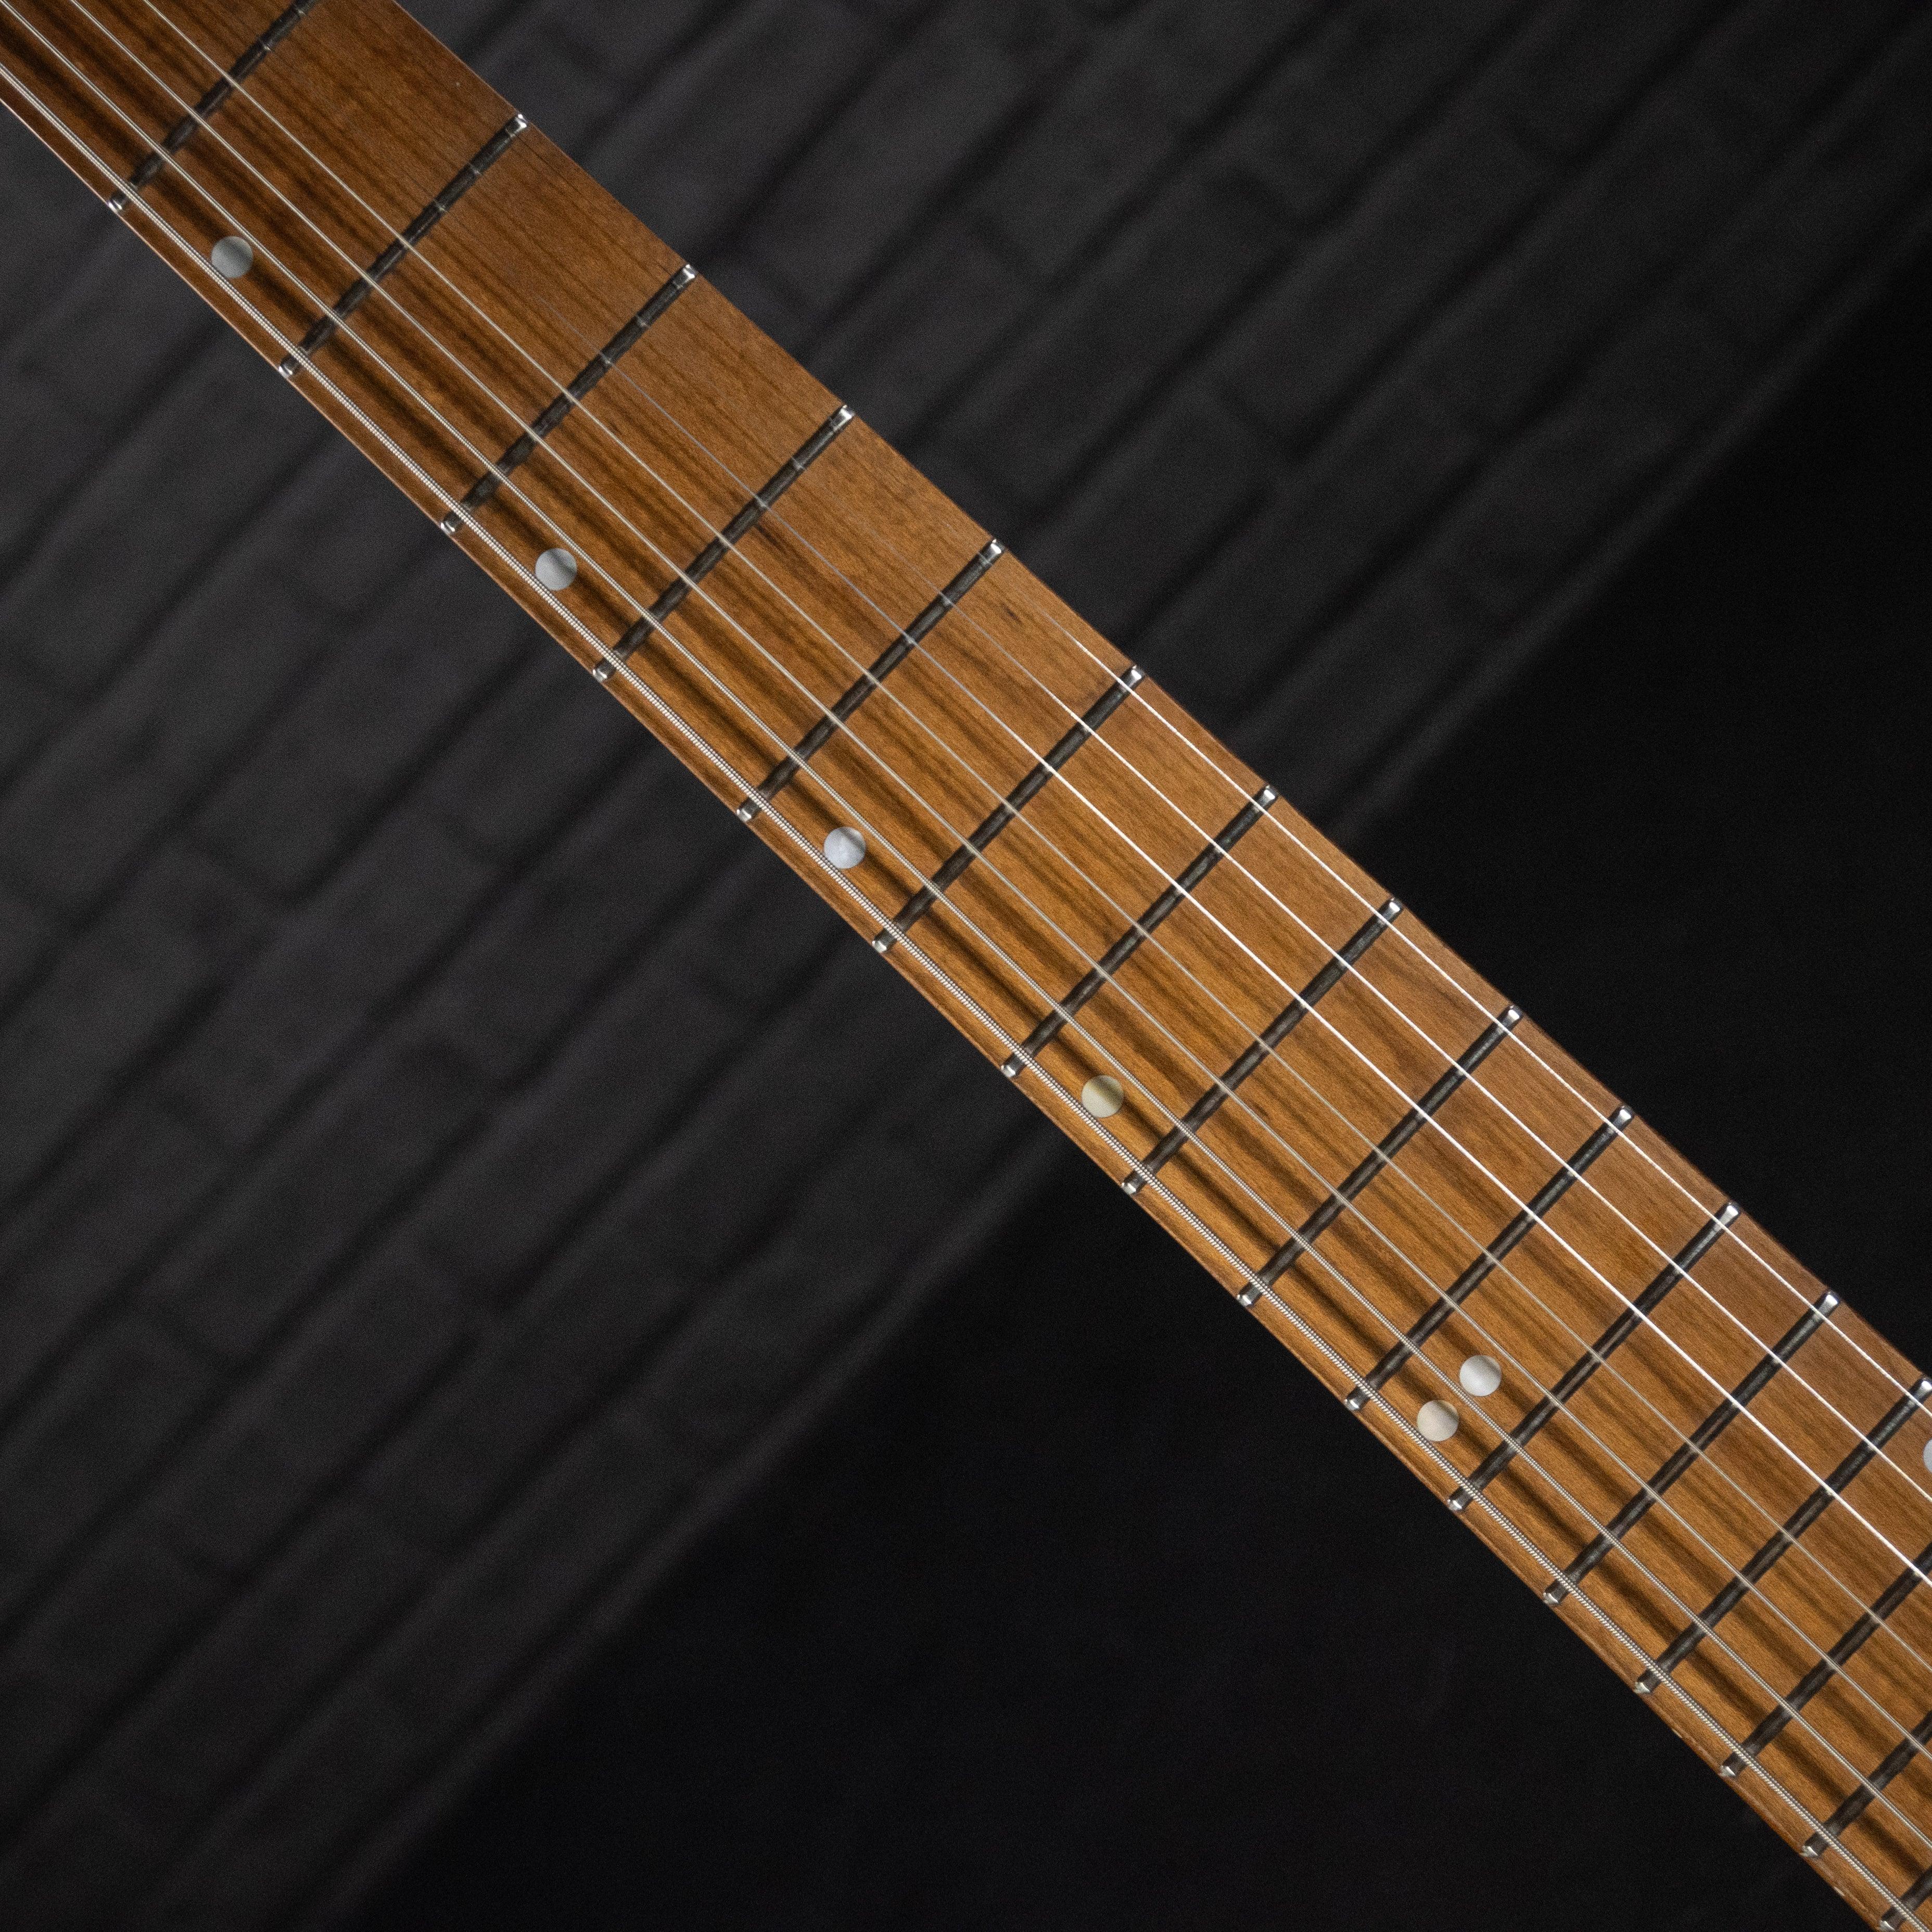 Legator OT7T 7-String Electric Guitar (Satin Black) - Impulse Music Co.